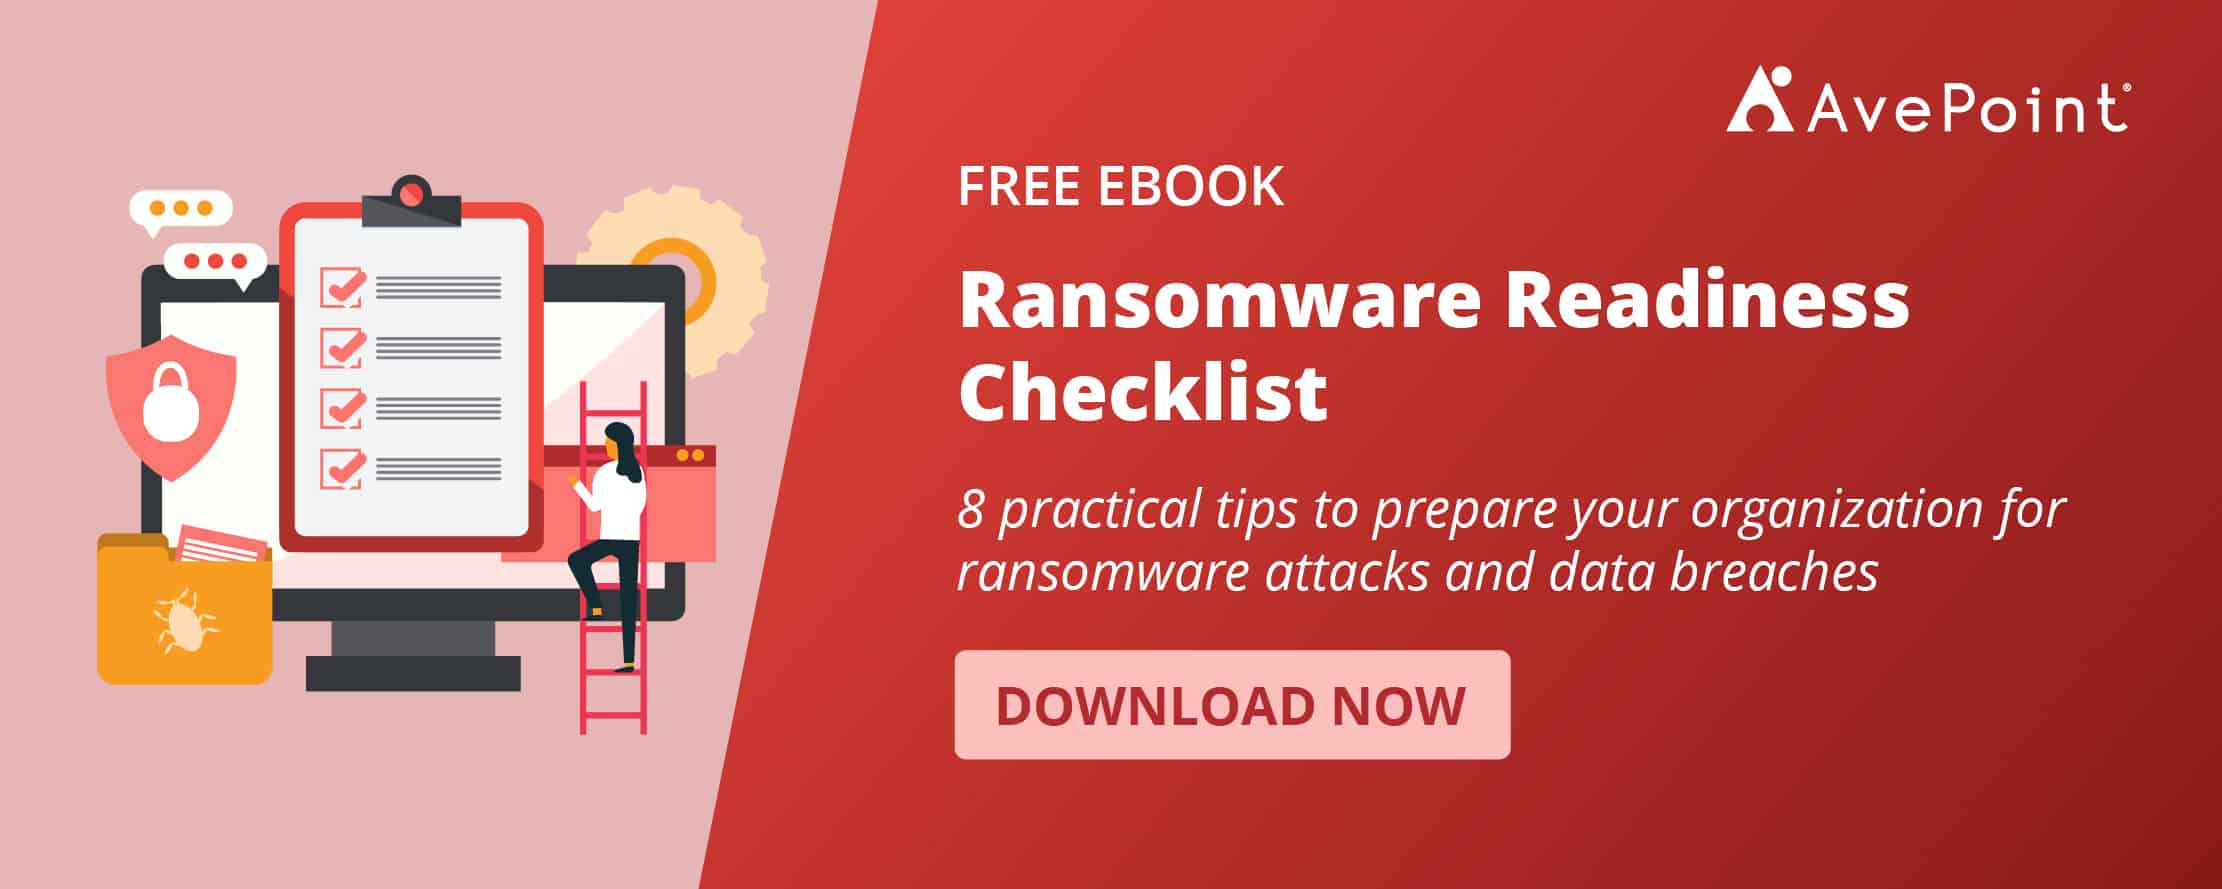 Ransomware Readiness Checklist ebook